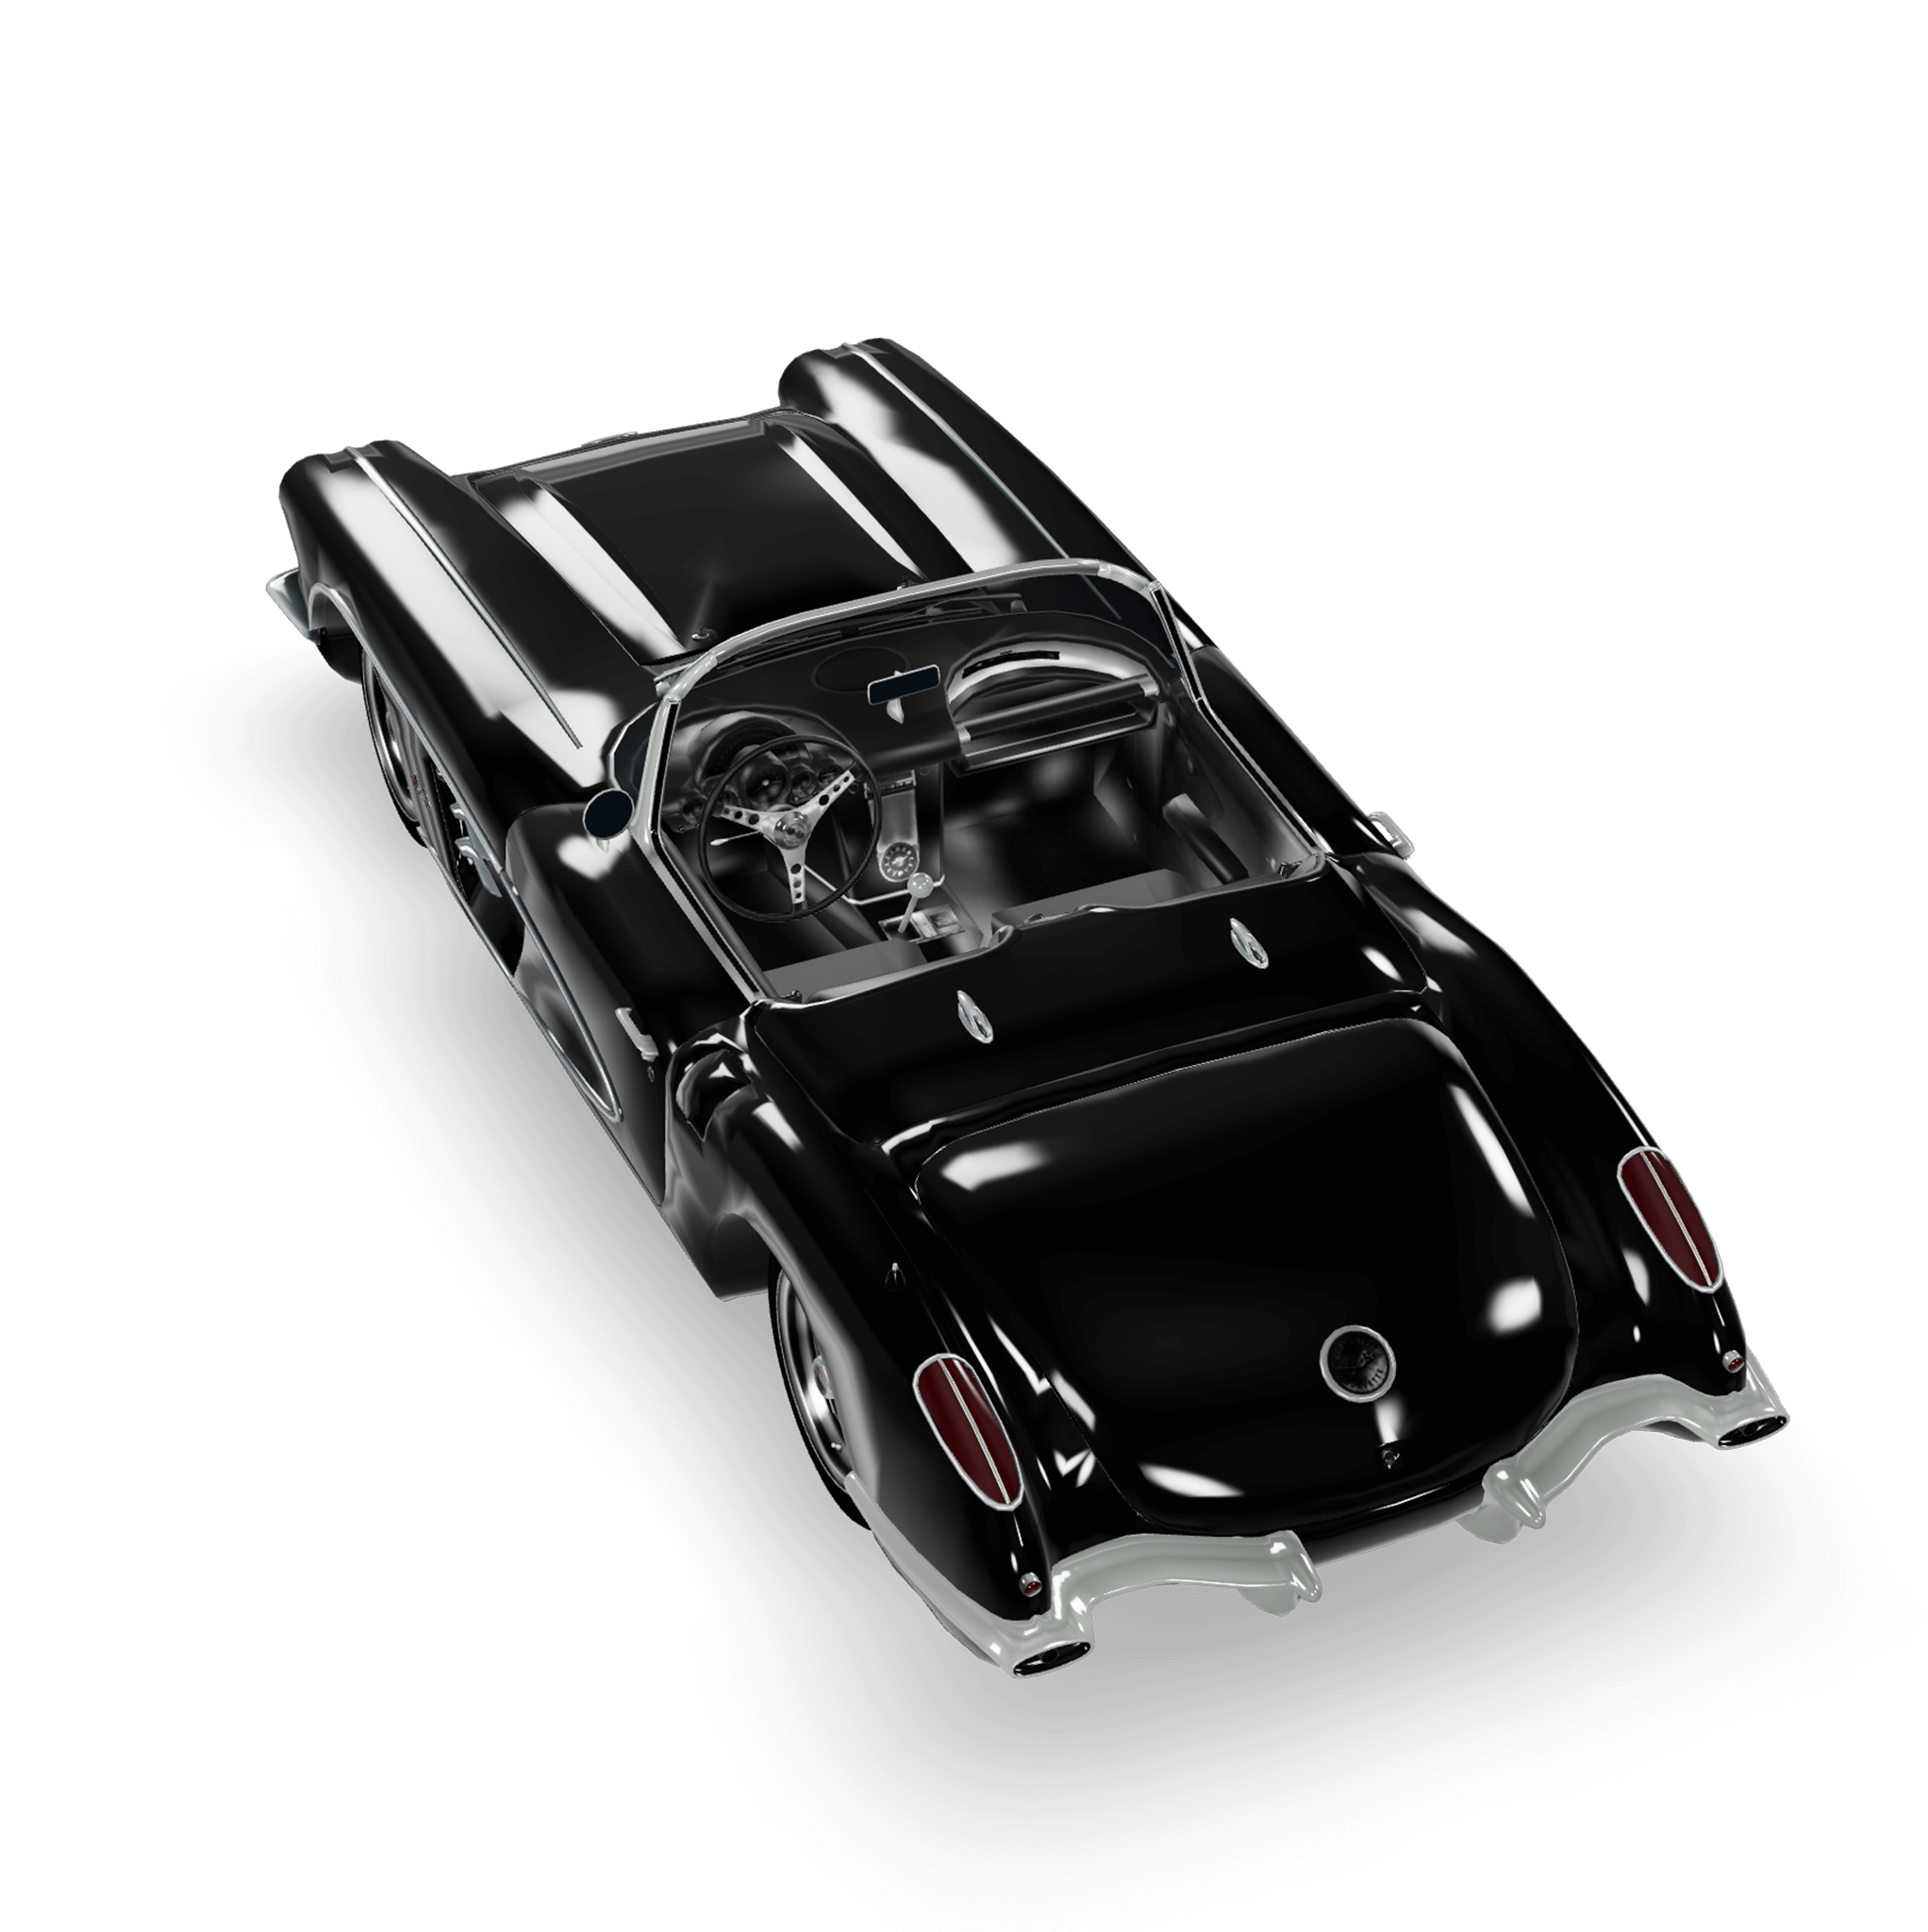 Top 3D render of the Corvette